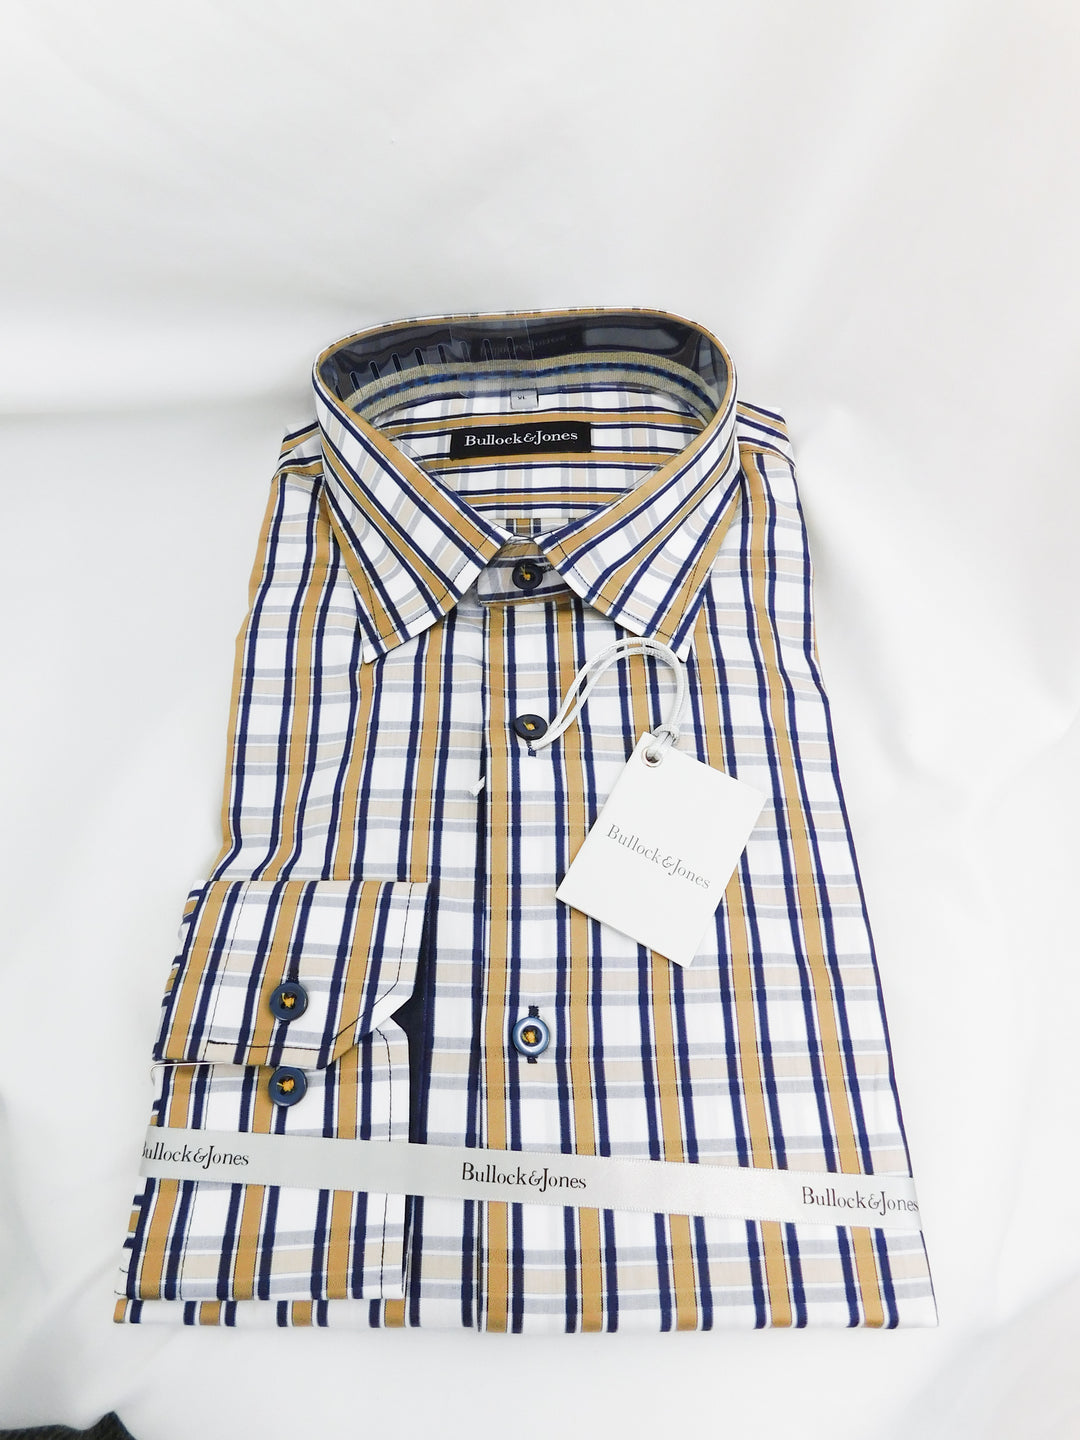 Bullock & Jones Plaid Shirt - Size XL